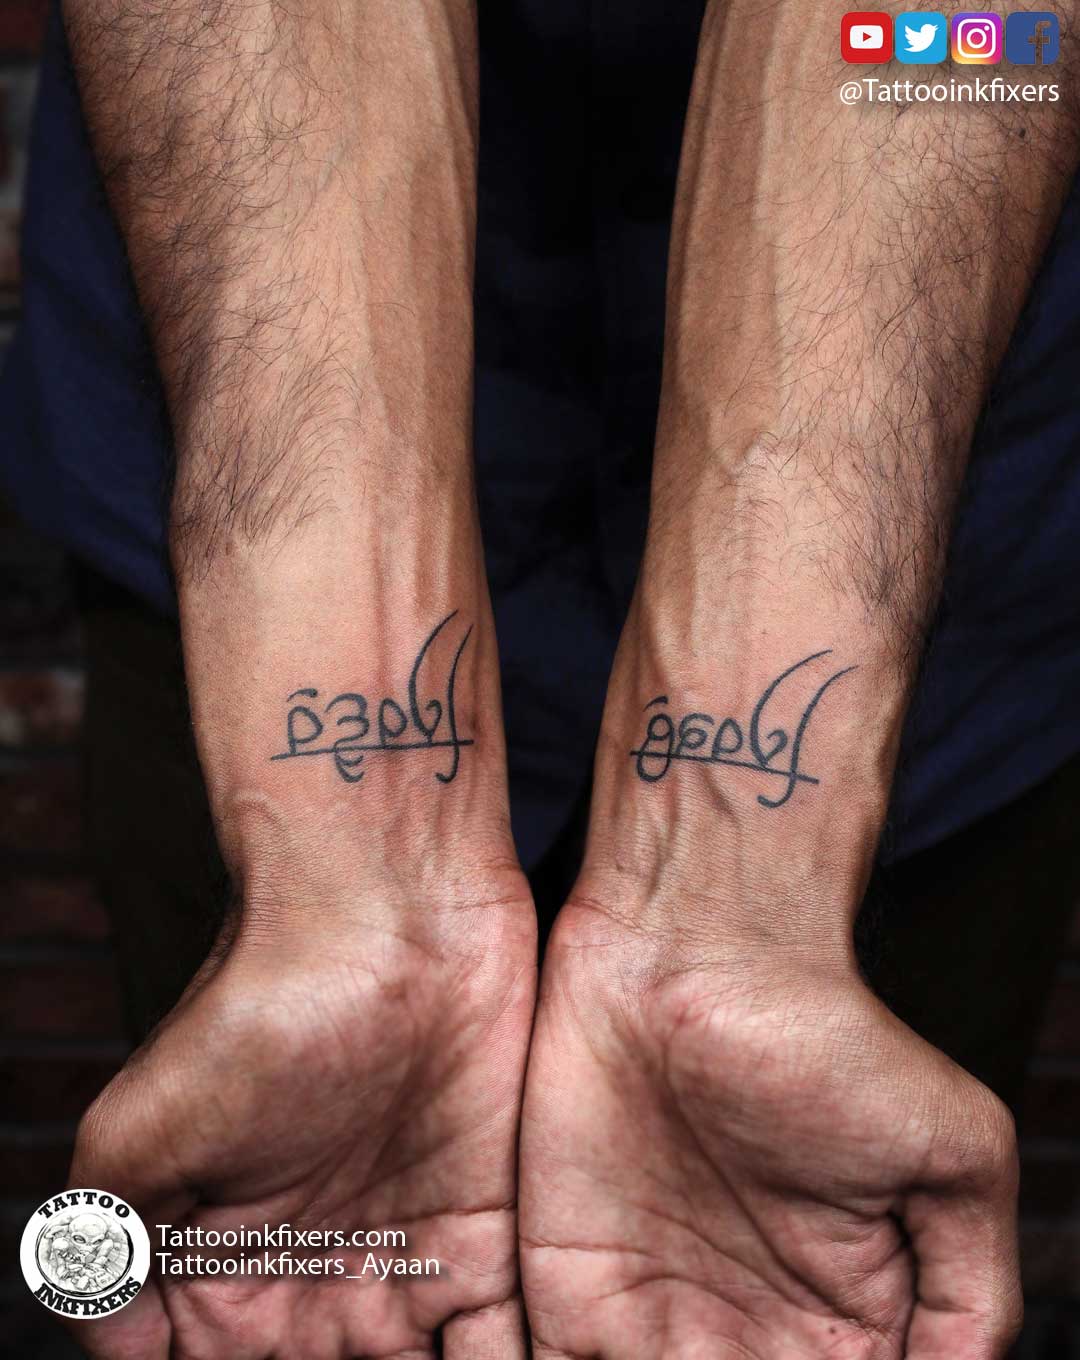 Harleen Sethi Gets Emotional While Carving New Tattoo Nirbhau Nirvair